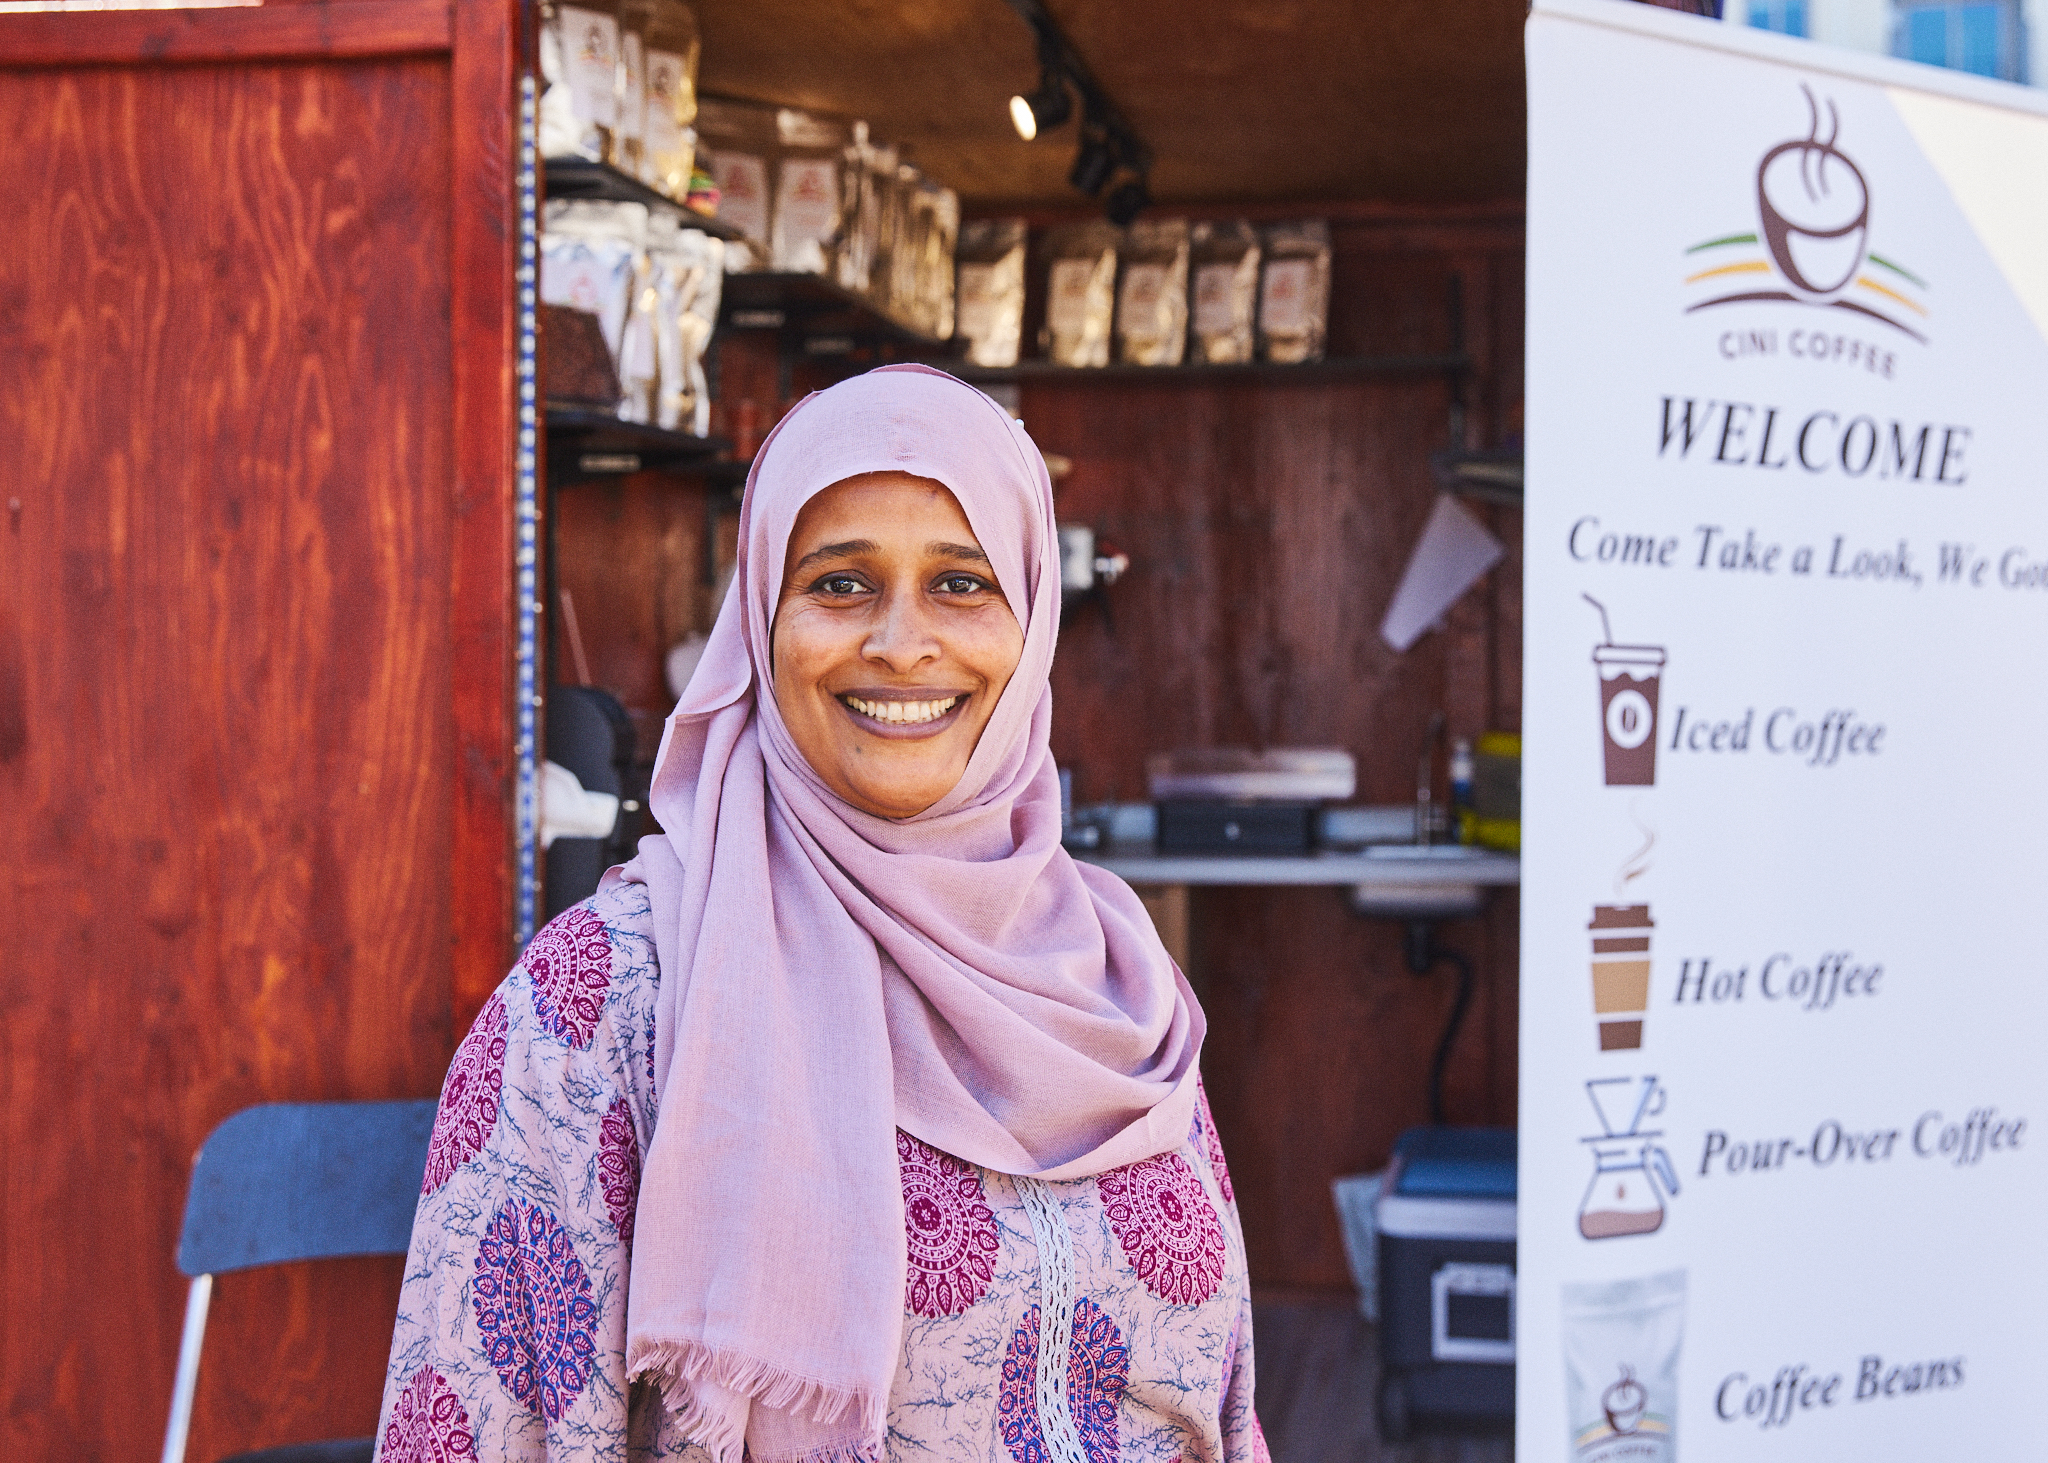 The owner of Cini Coffee, Nefisa Siraj, at Popportunity. Credit: Nick Surette, Central Square BID